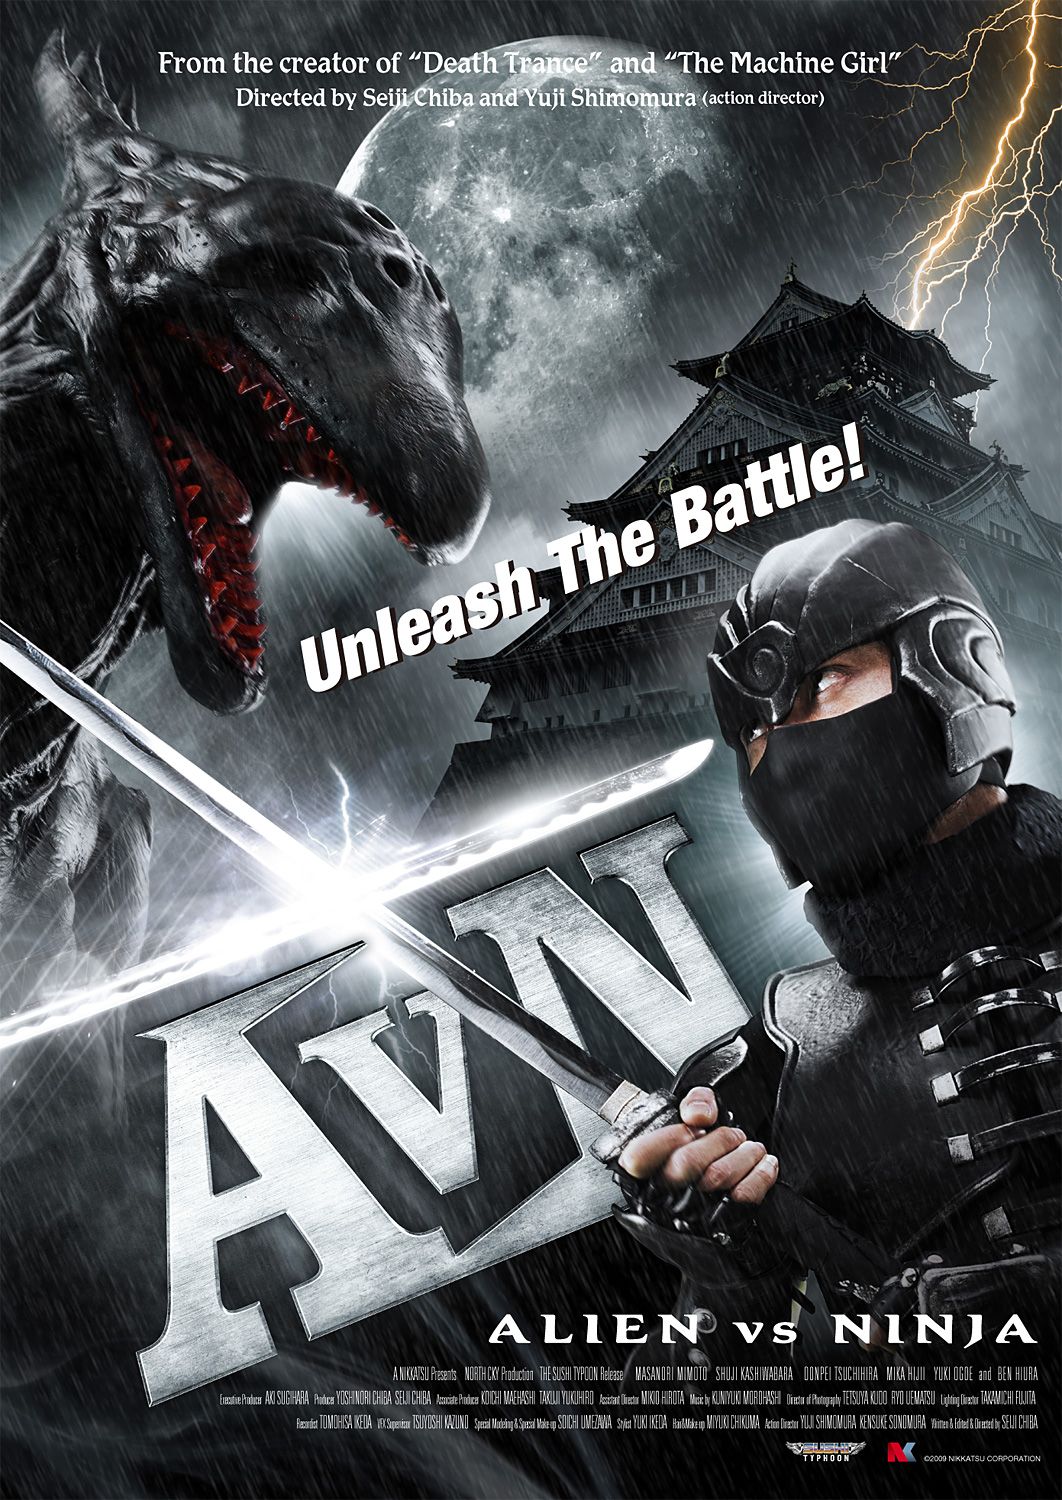 Extra Large Movie Poster Image for Alien vs Ninja (#2 of 2)